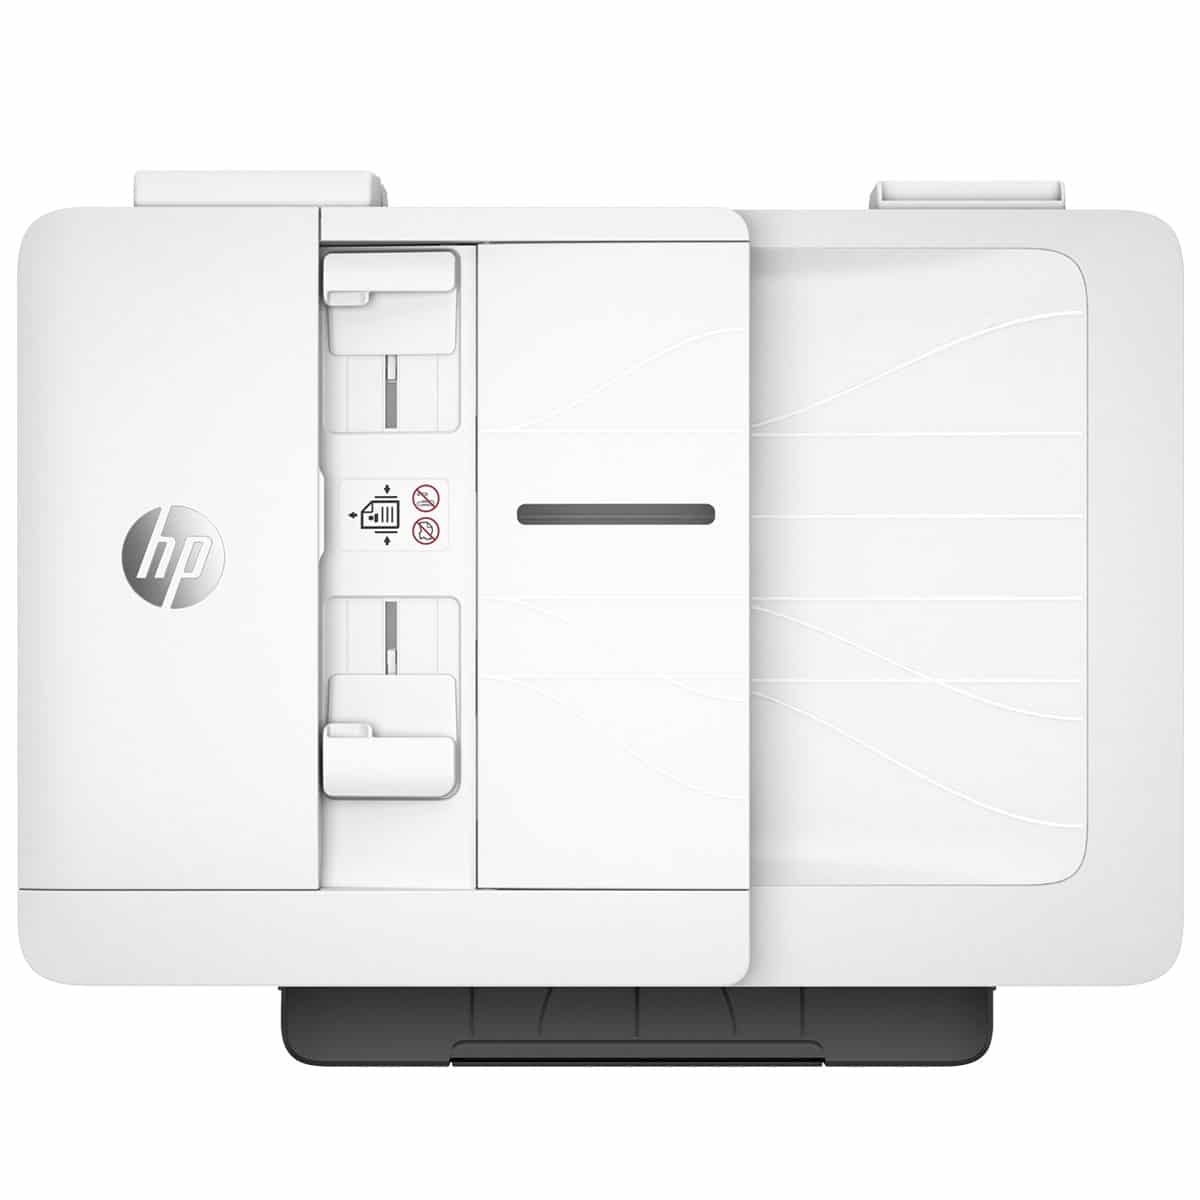 HP OfficeJet Pro 7740 WF AiO Printer - Vertexhub Shop-HP